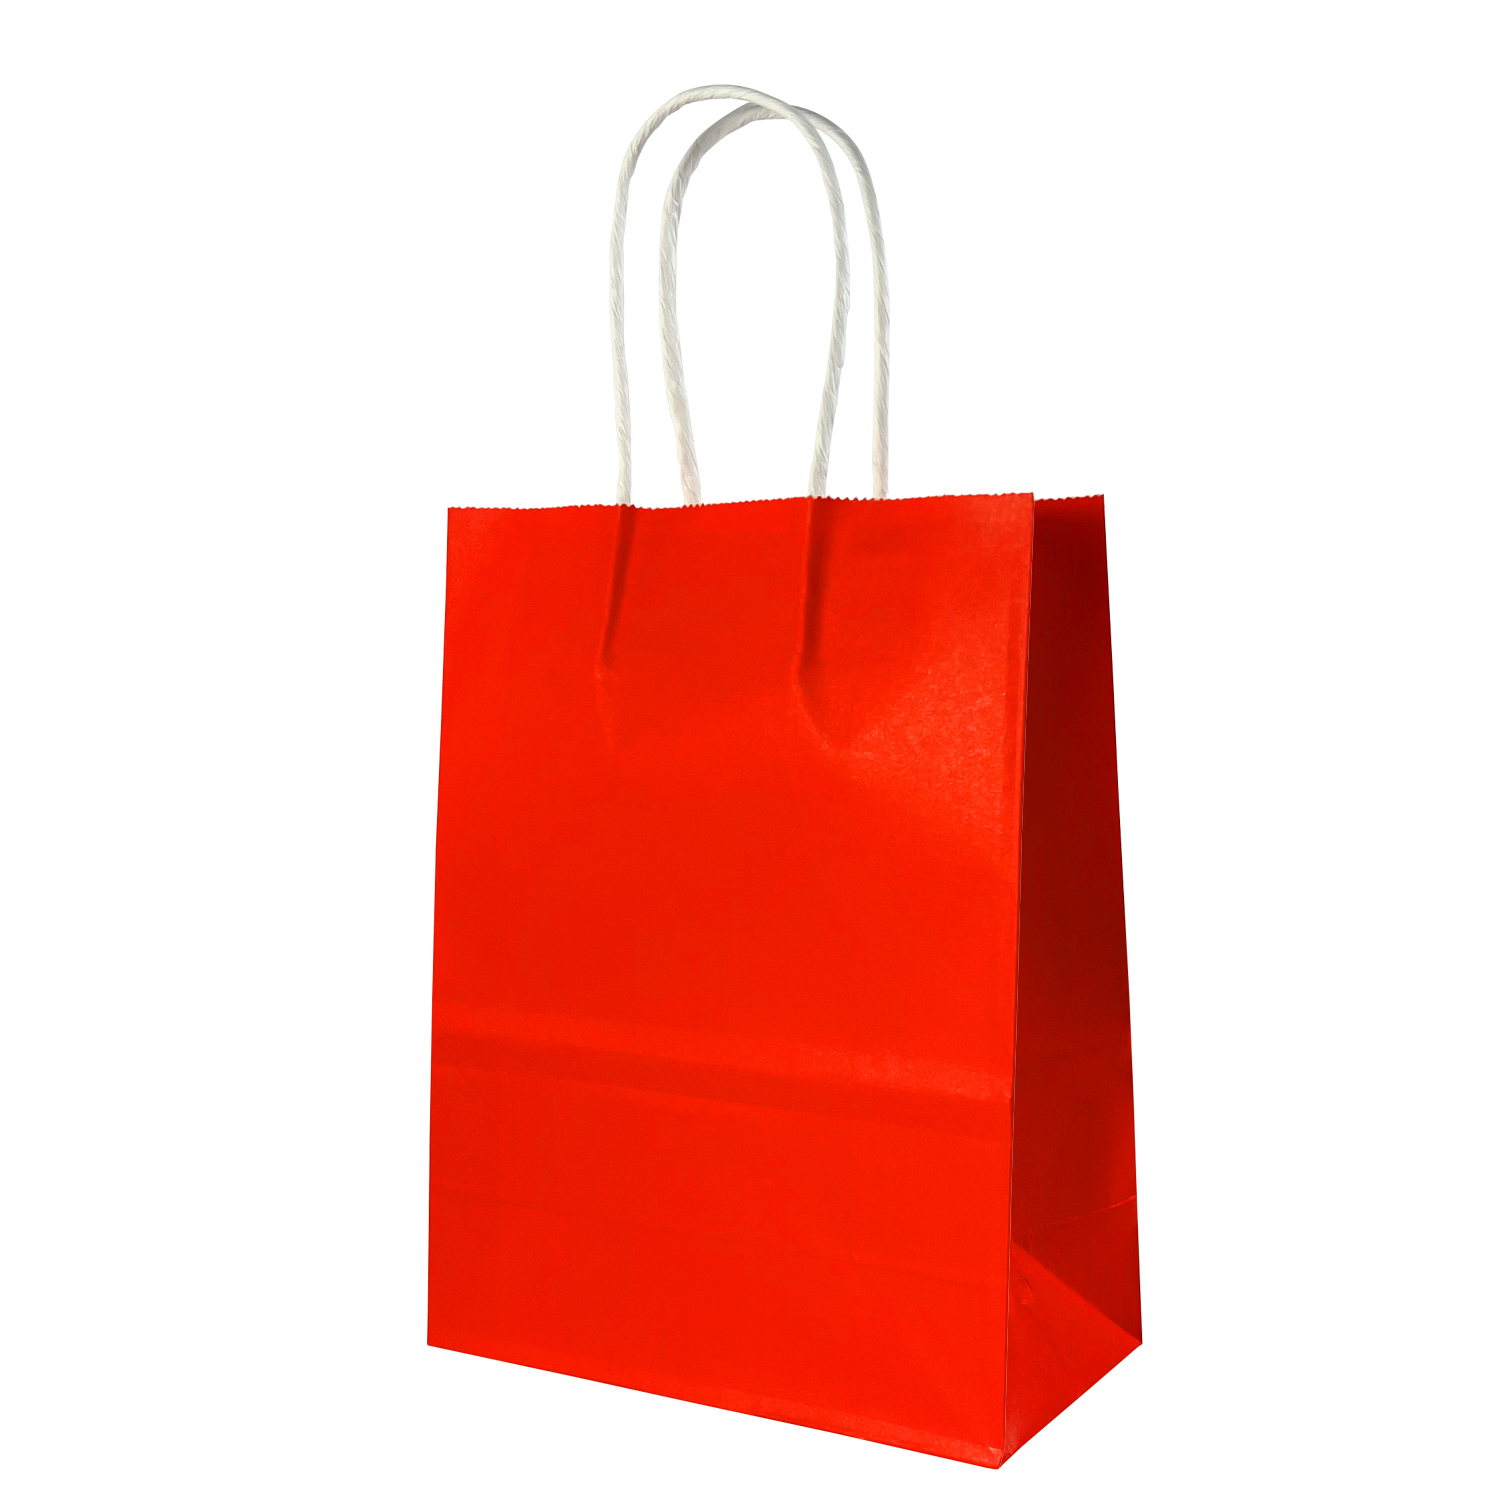  QQ - Bolsas de papel marrón extra pequeñas de 3 x 2 x 6  pulgadas, regalos de fiesta, bolsas de almuerzo de papel, bolsa de  comestibles, bolsas de regalo de boda